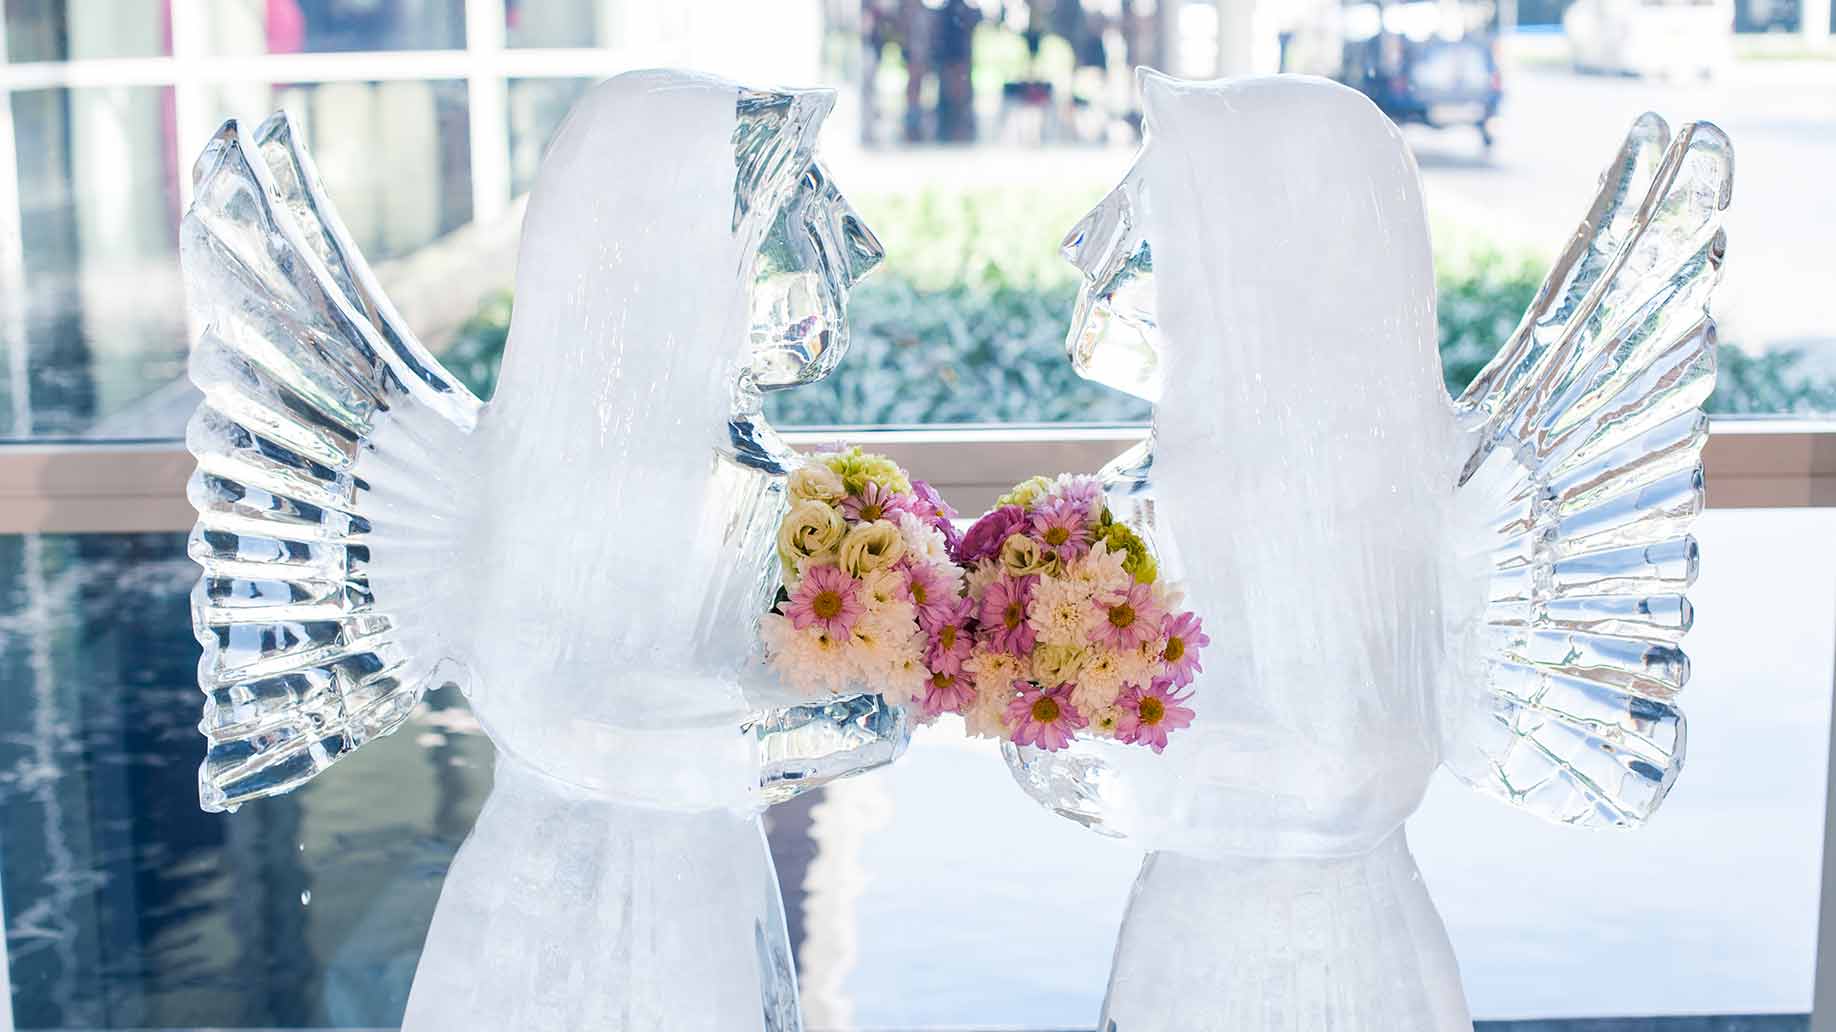 Elegant and complex wedding ice sculpture